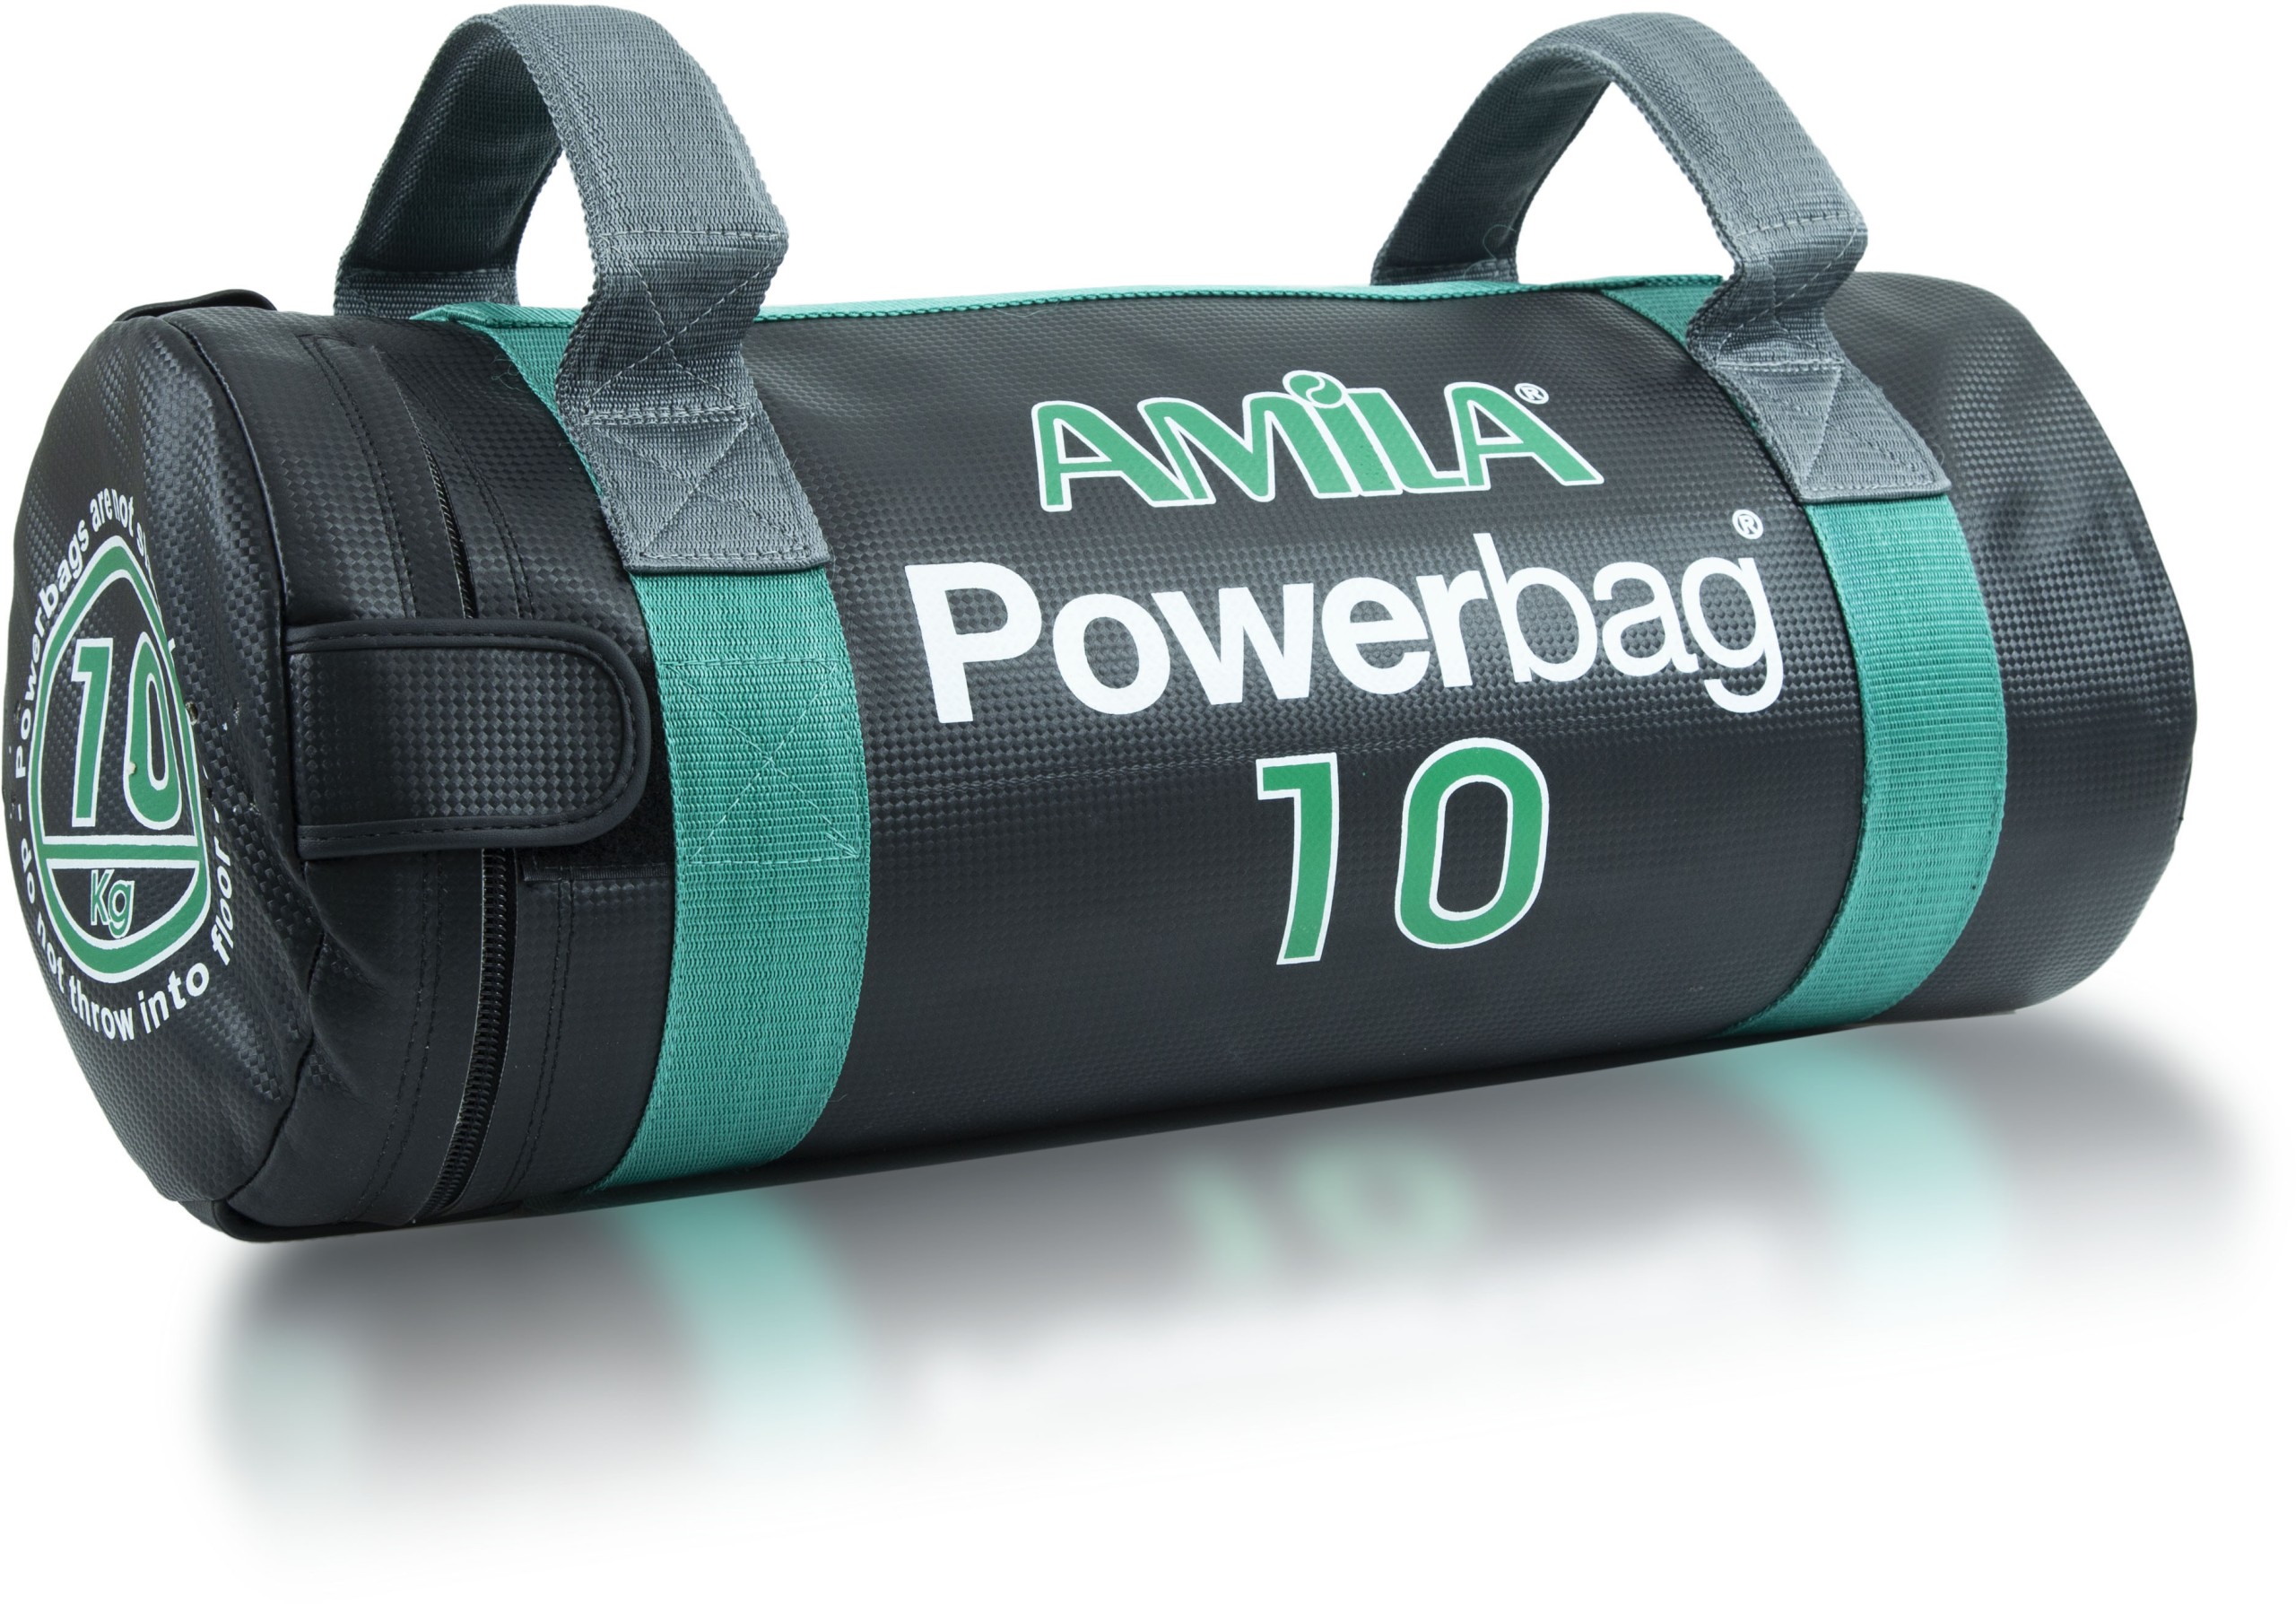 AMILA Power Bag 10Kg